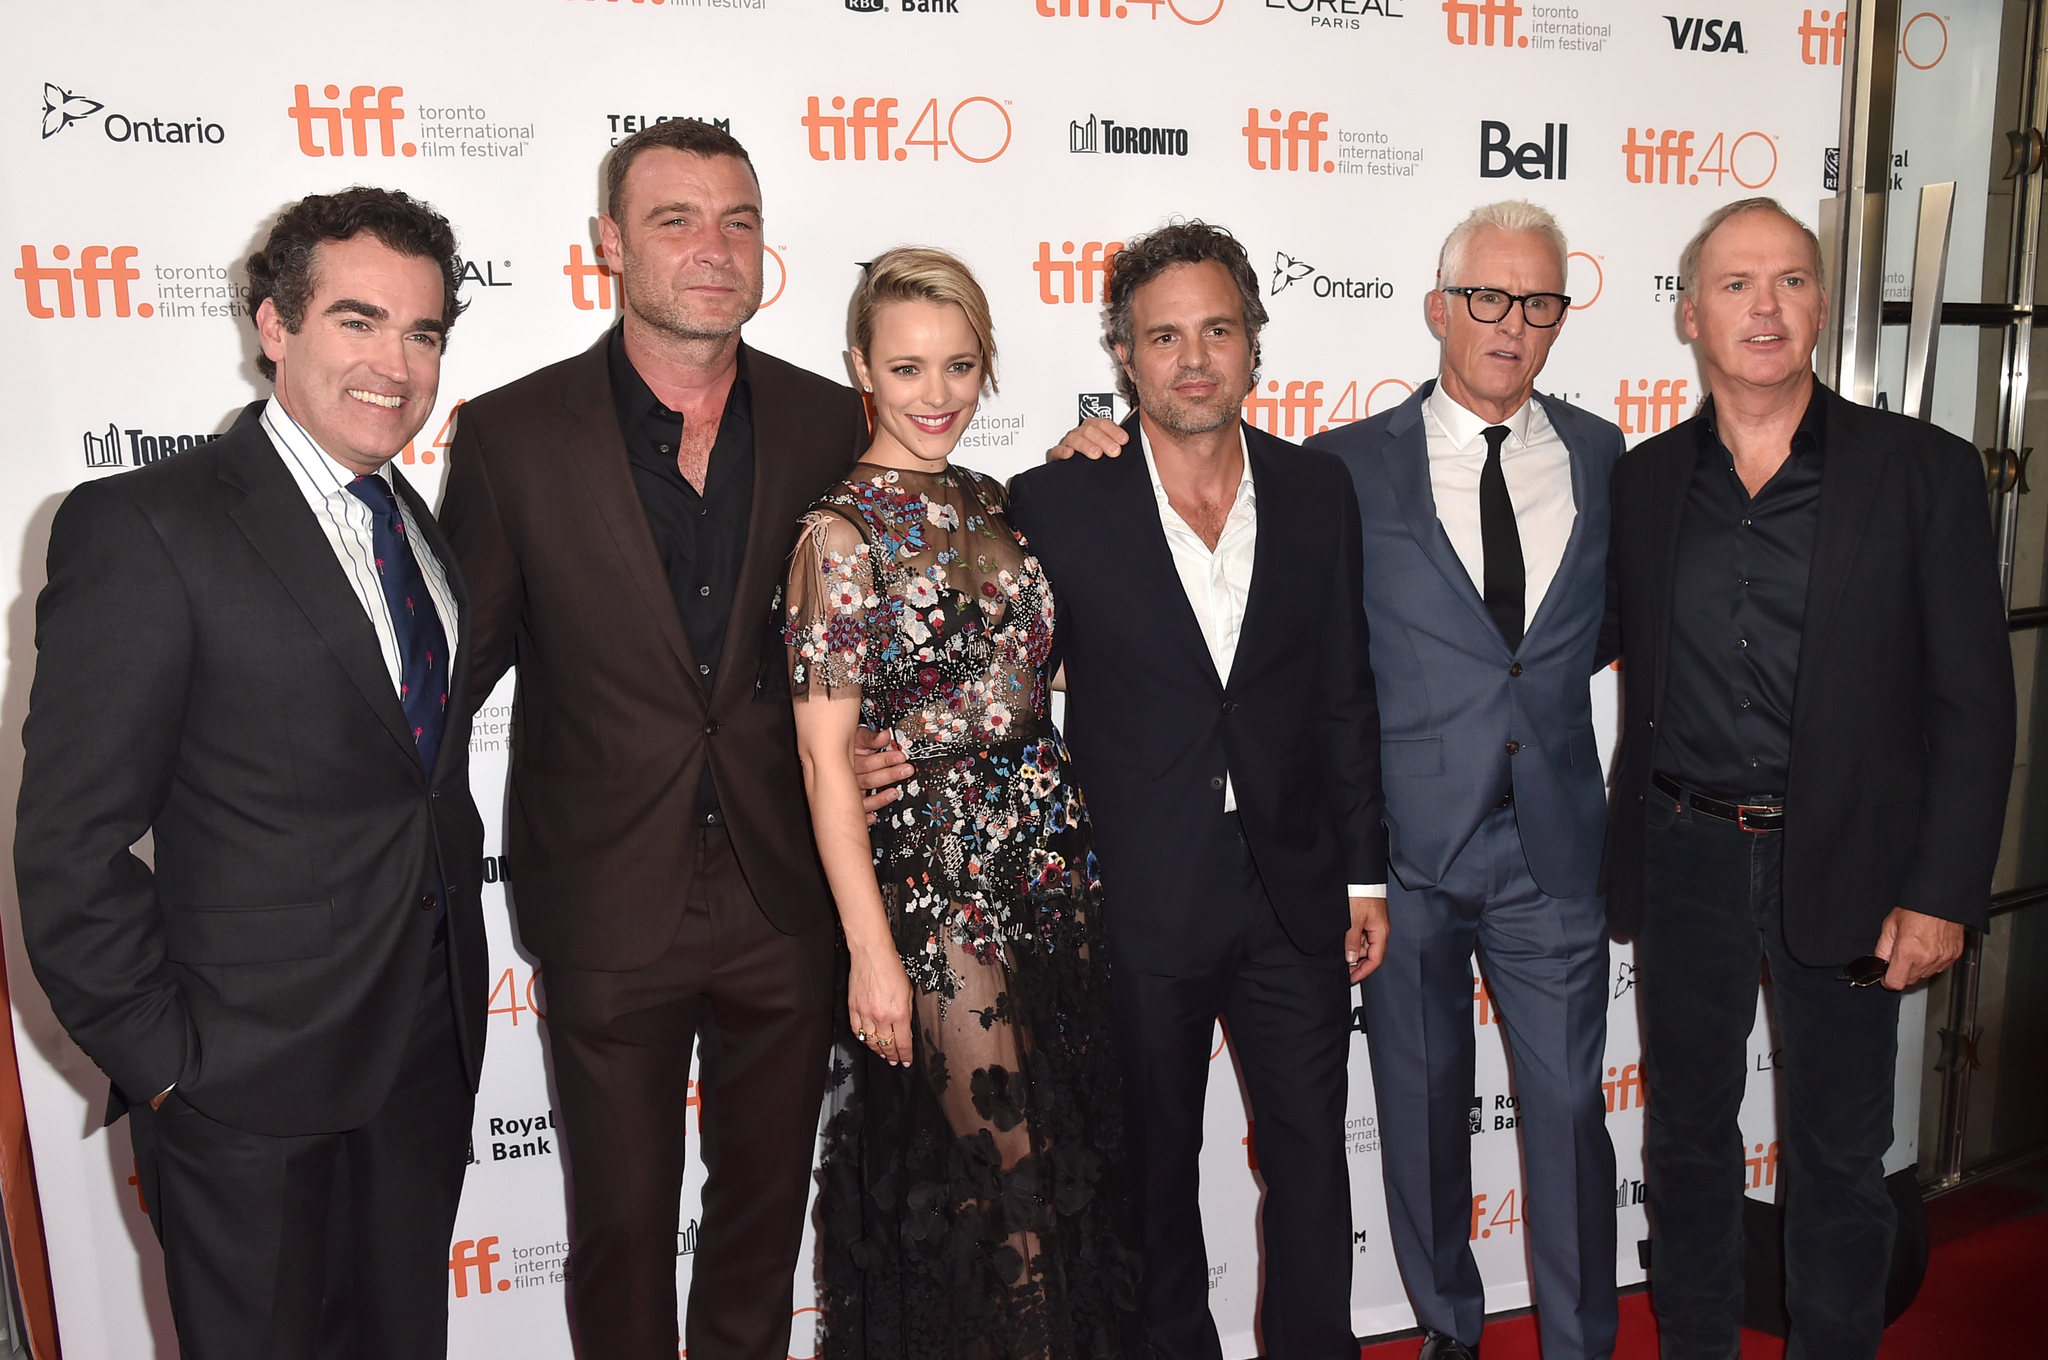 Michael Keaton, Liev Schreiber, Brian d'Arcy James, Mark Ruffalo, John Slattery and Rachel McAdams at event of Sensacija (2015)